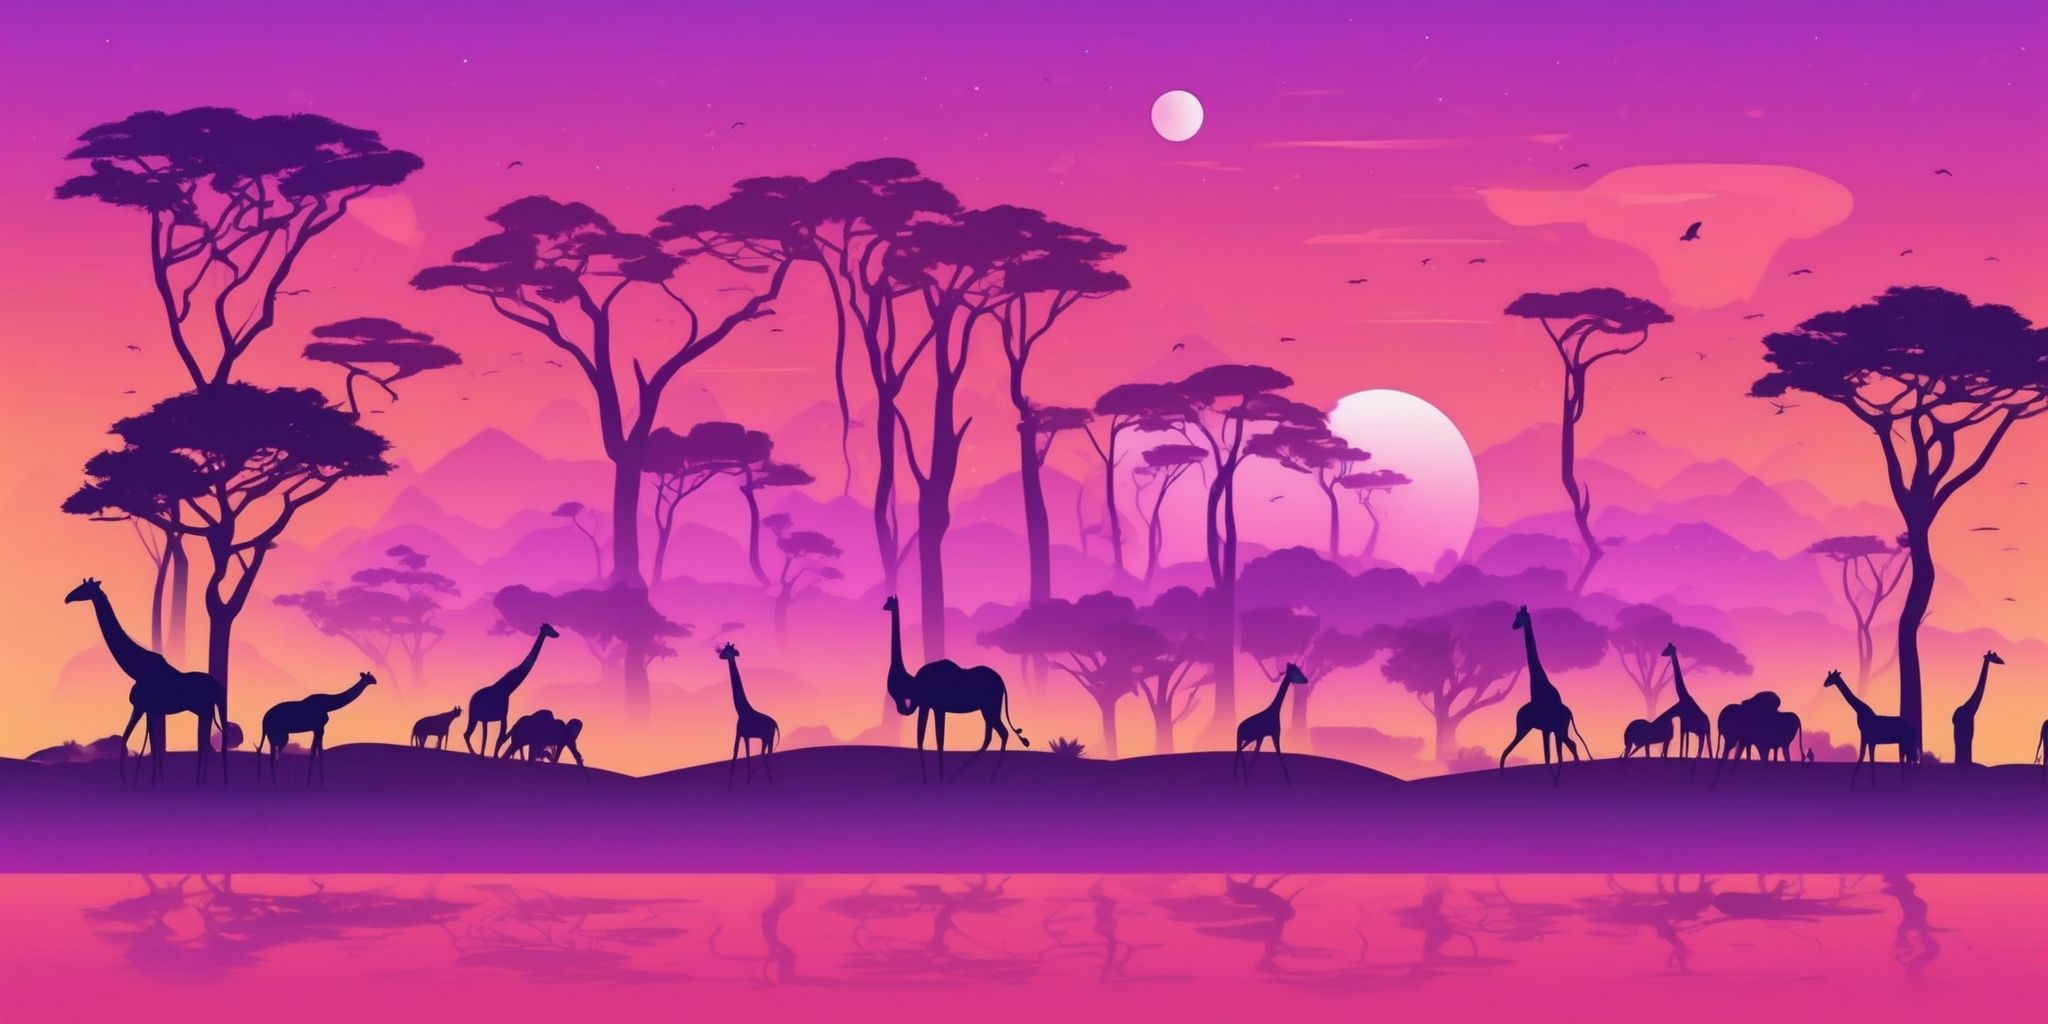 Safari in flat illustration style, colorful purple gradient colors